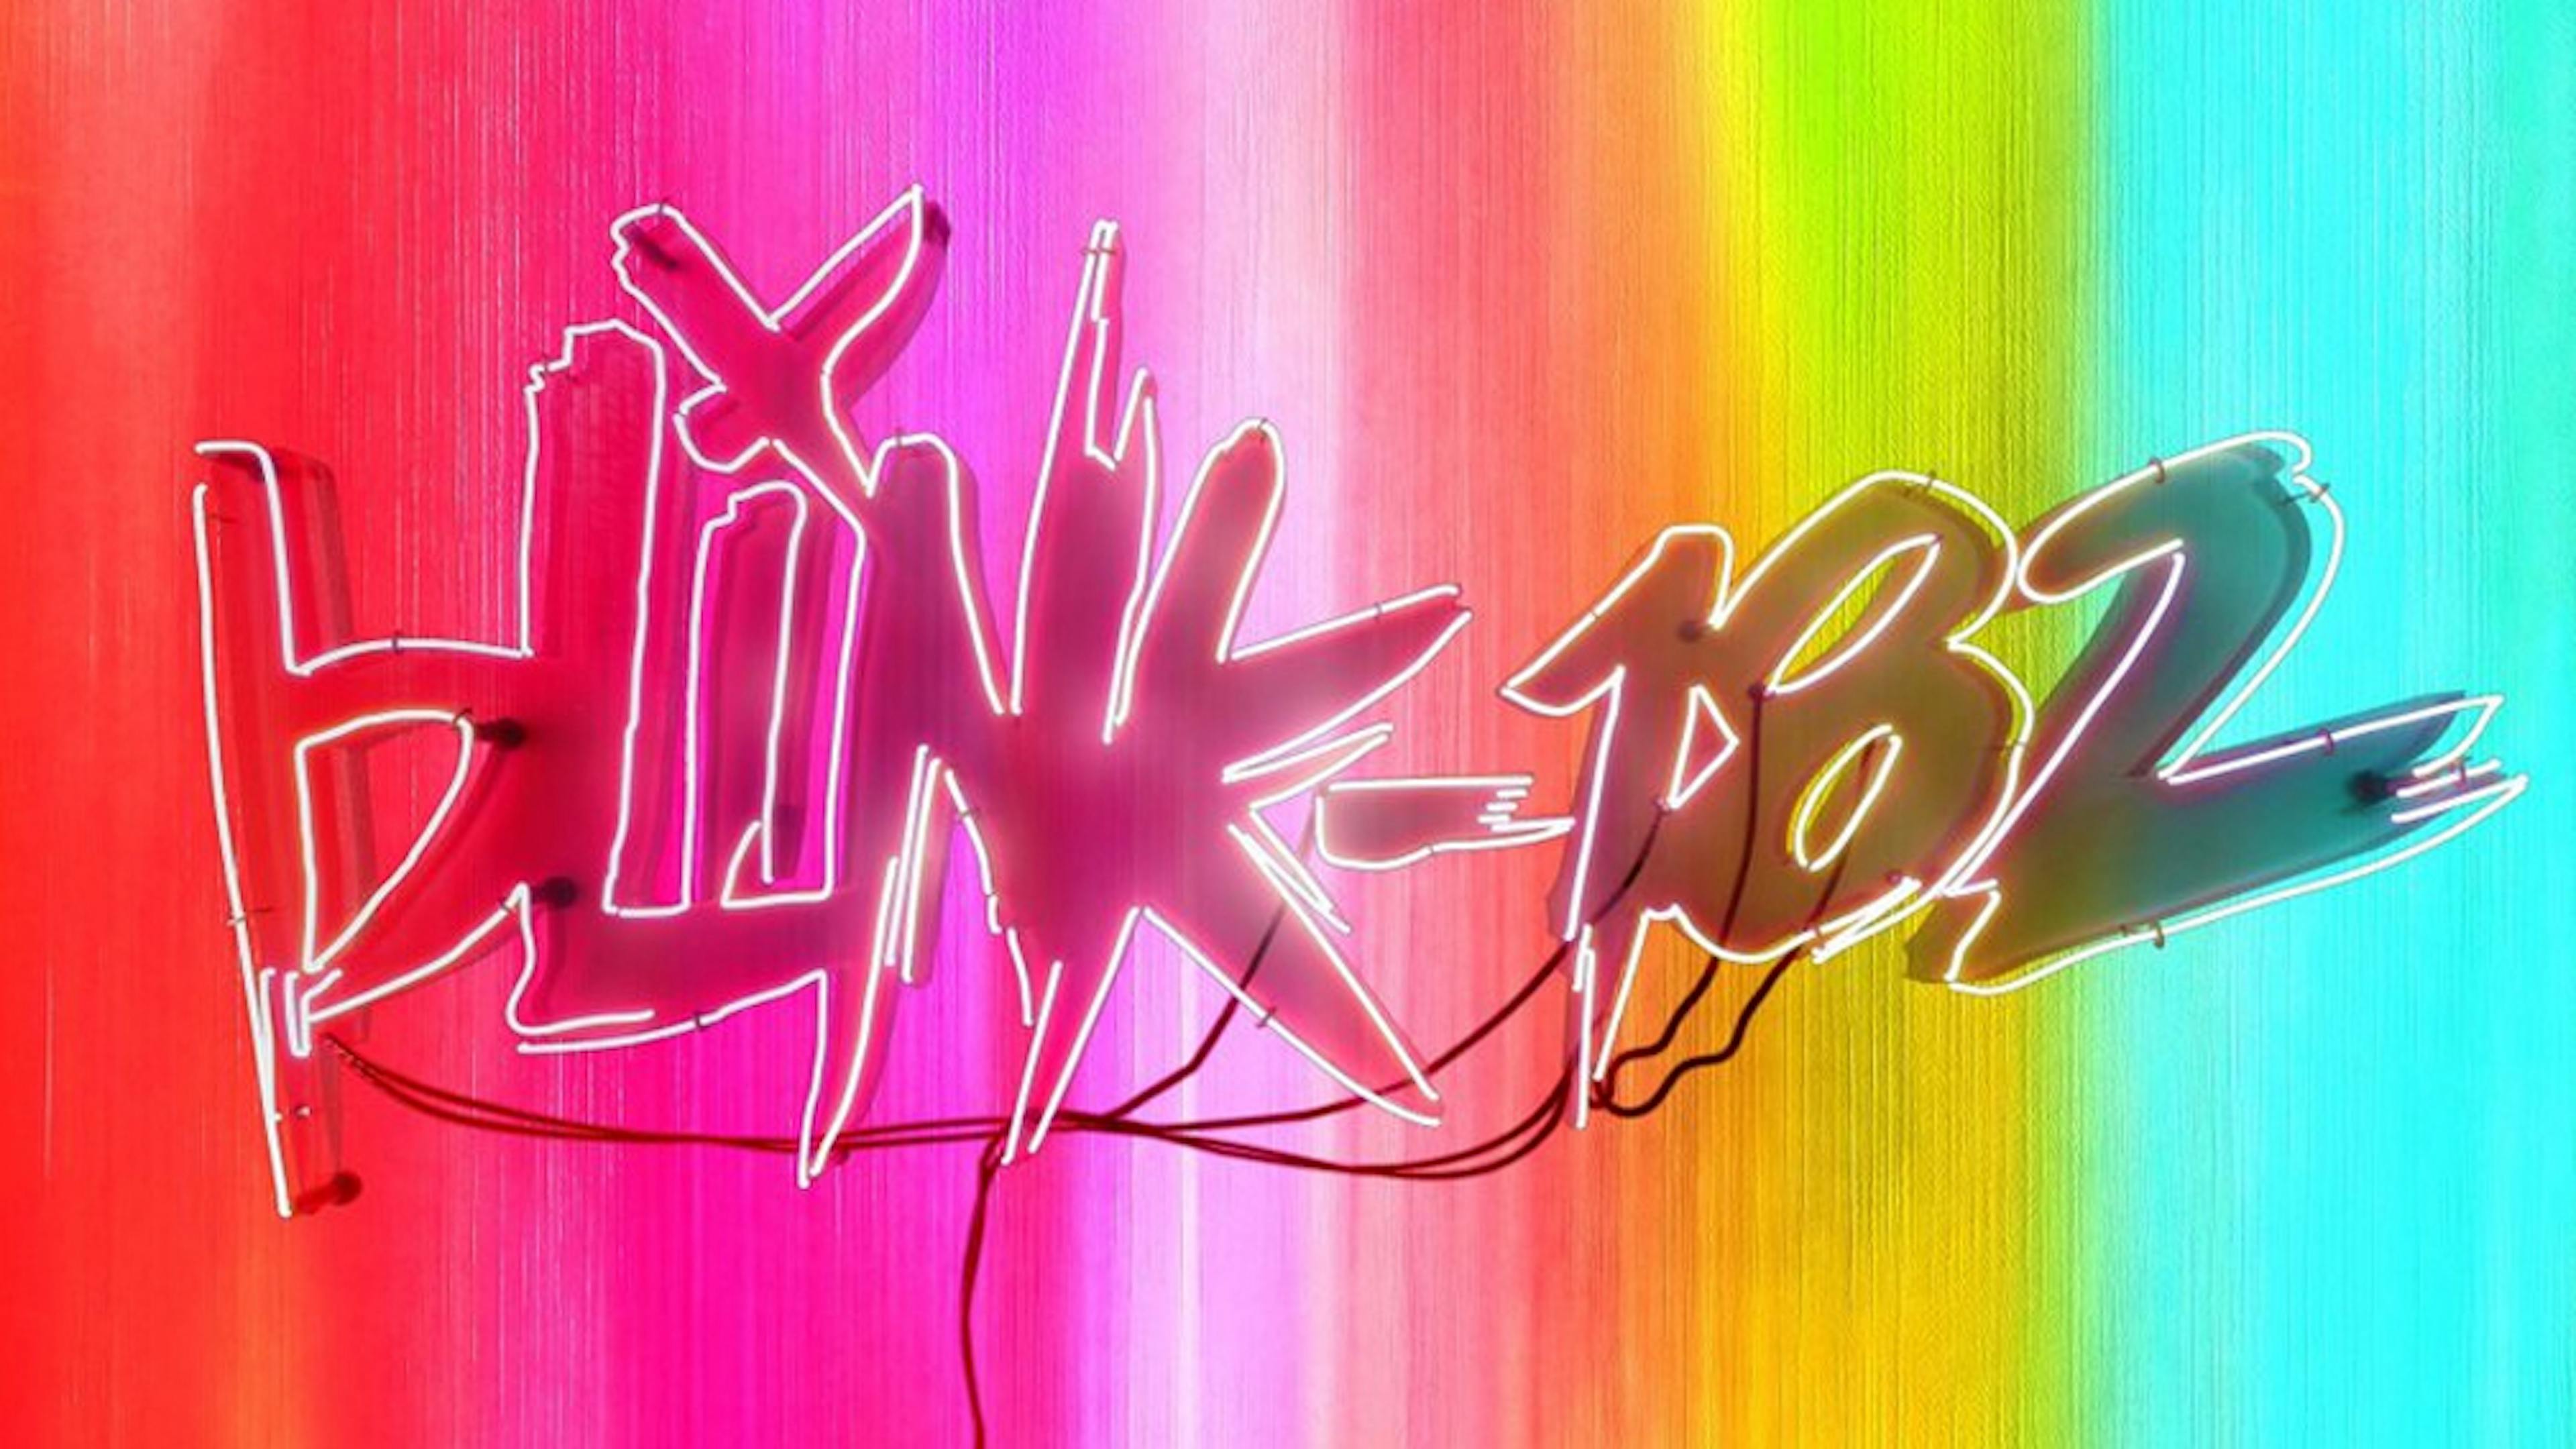 blink-182 Have Announced Their New Album, Nine